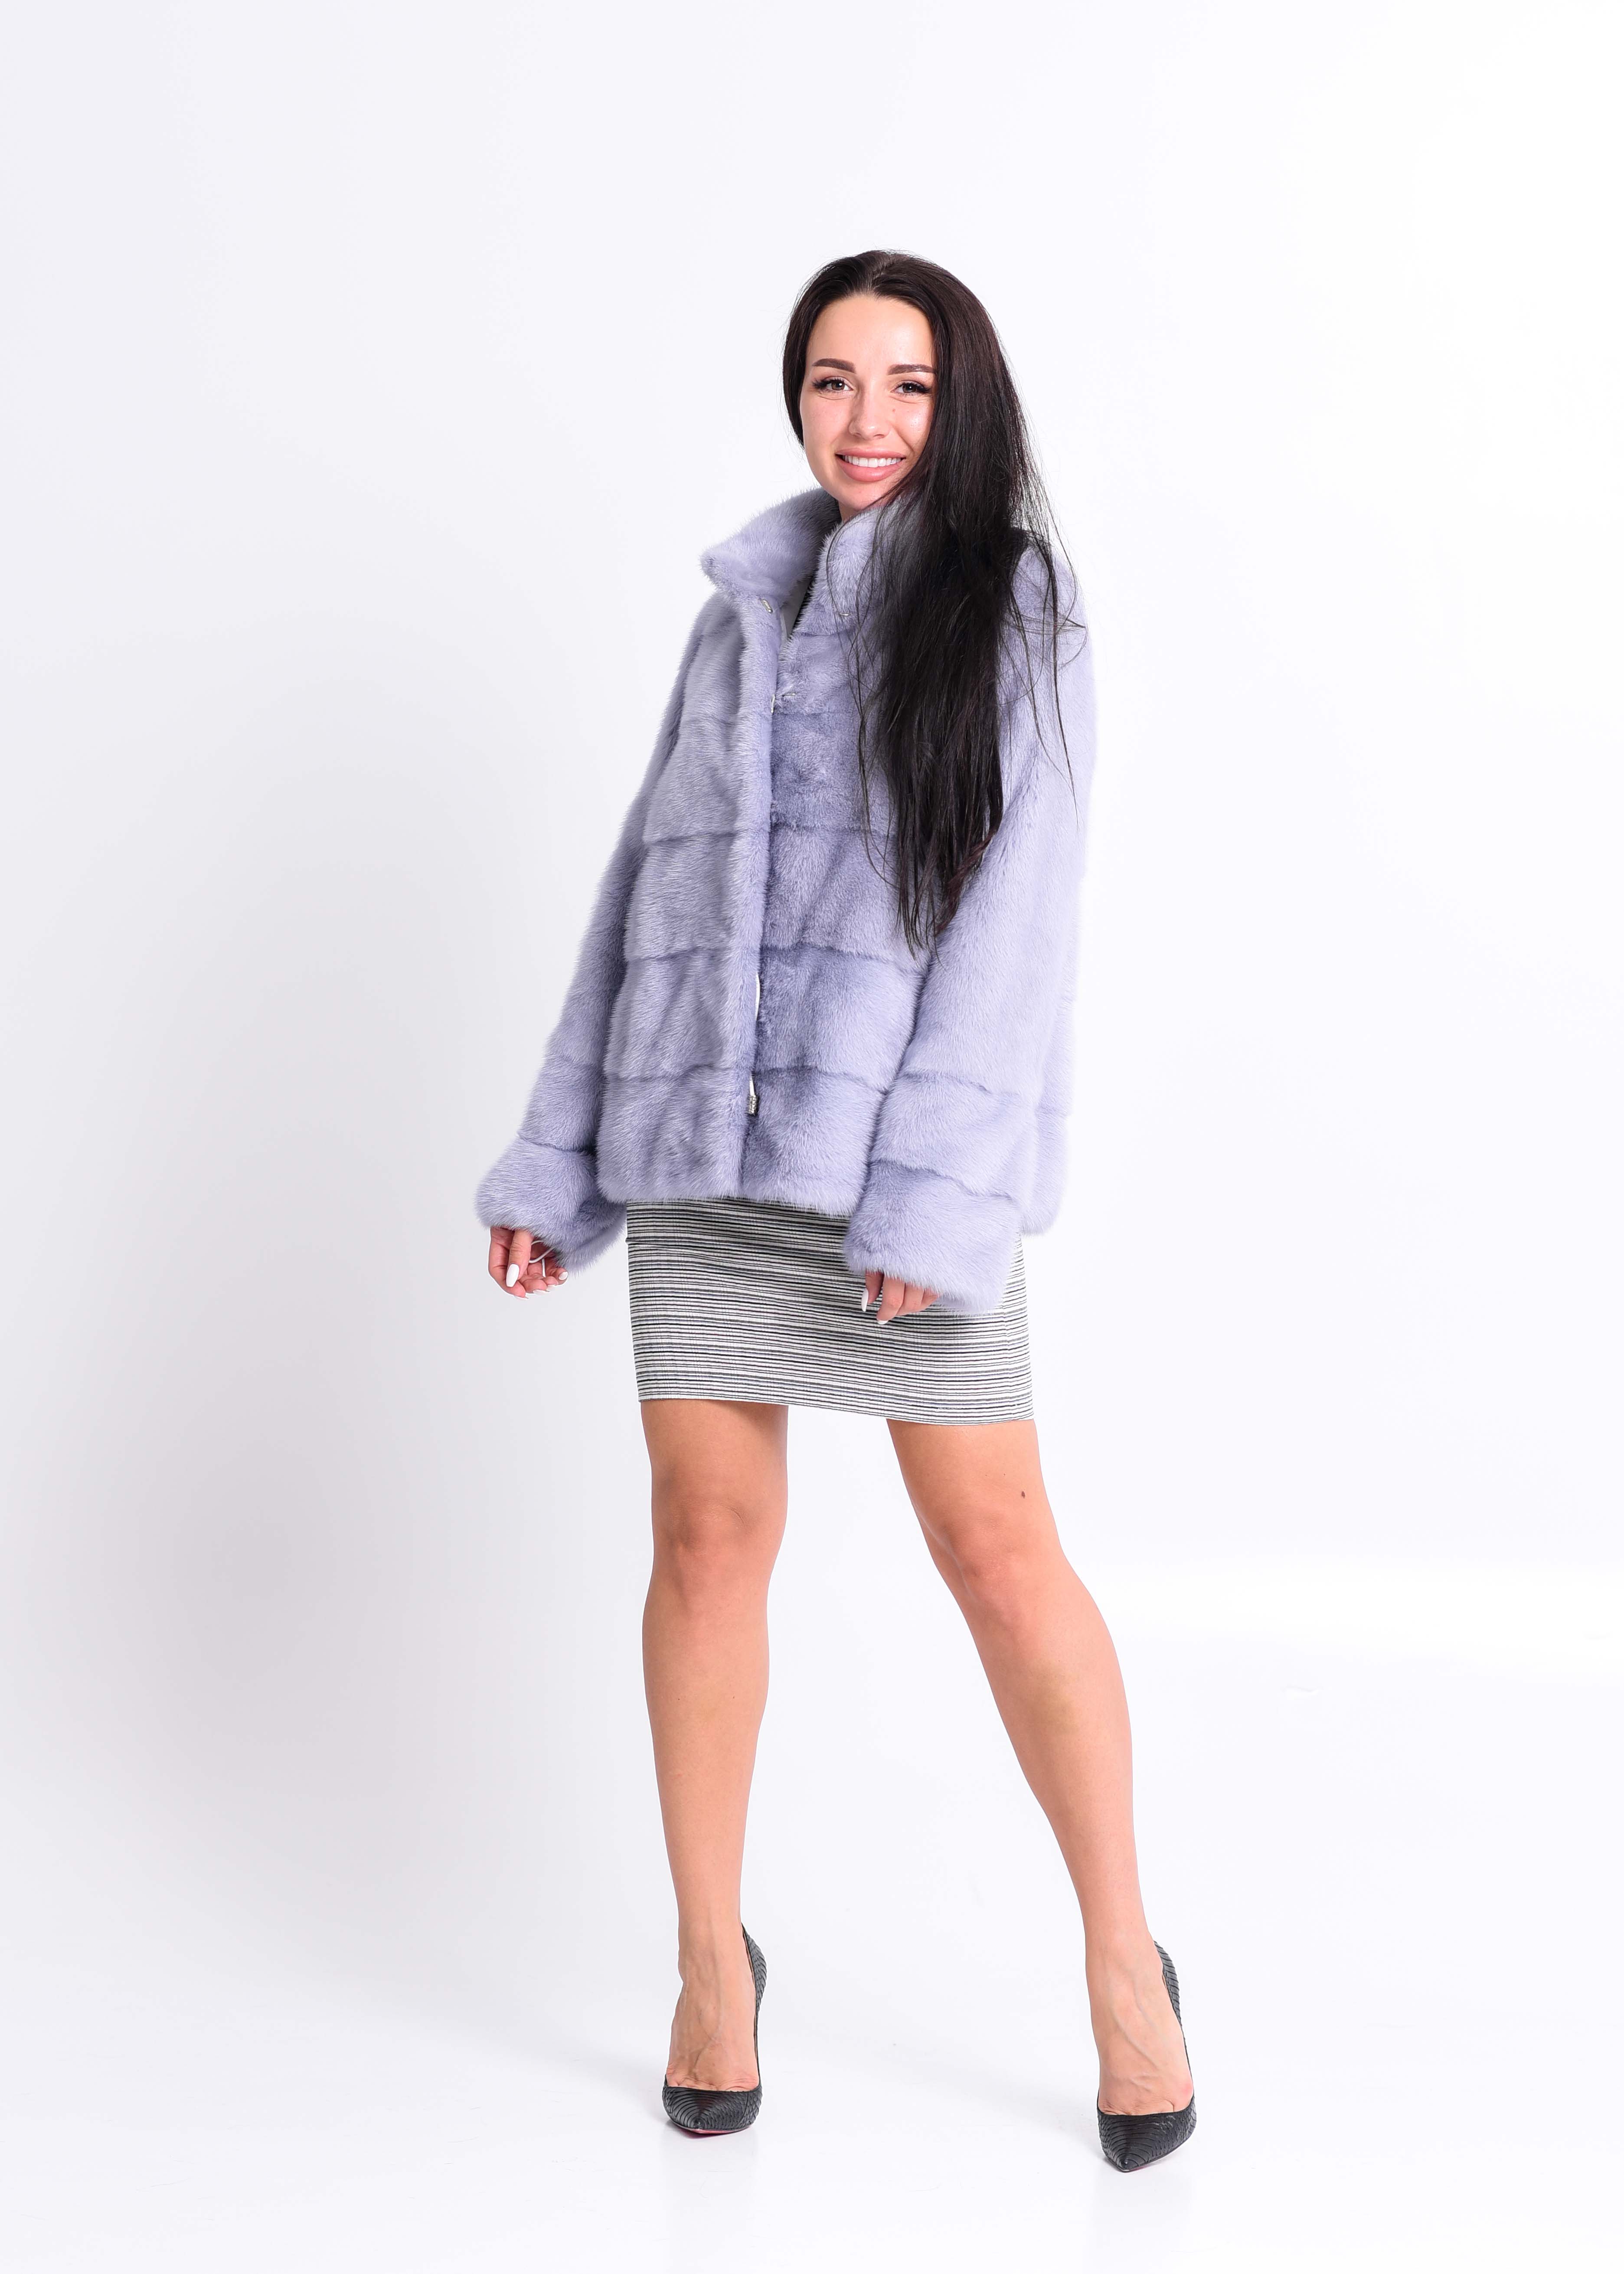 Short mink fur coat, collection 2020 - 2021